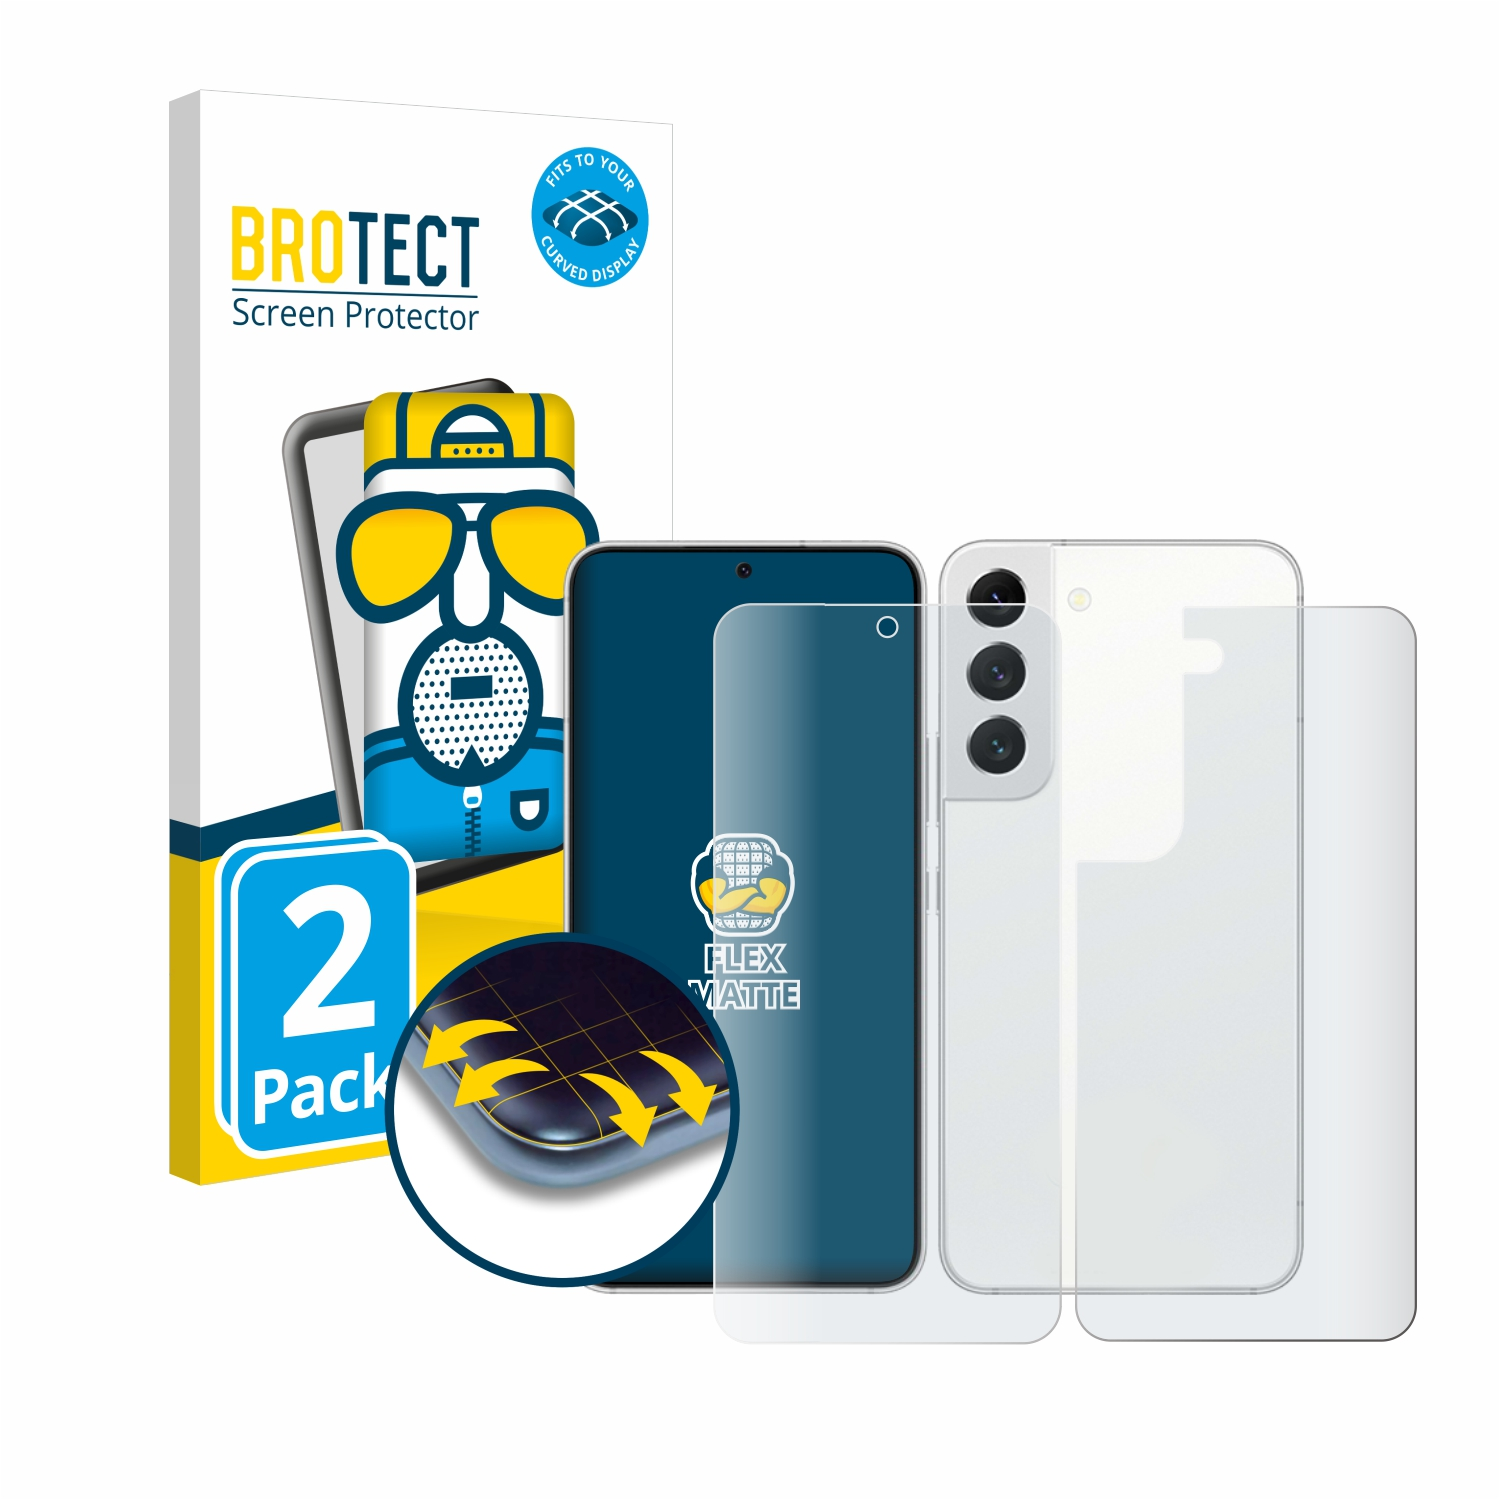 5G) Full-Cover Schutzfolie(für BROTECT S22 3D 2x Curved Samsung Flex matt Galaxy